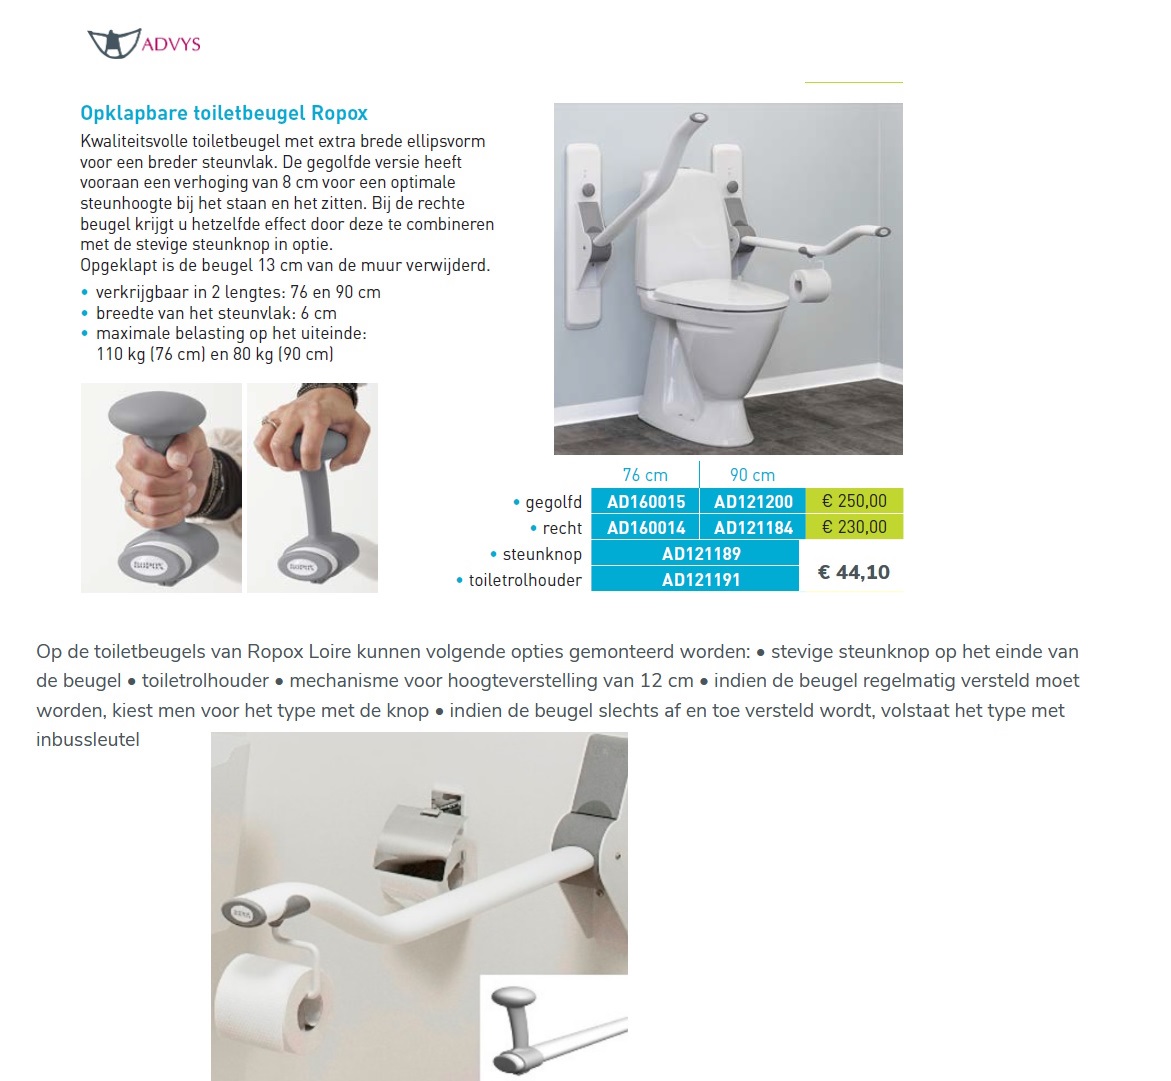 toegevoegd document 3 van Ropox Loire opklapbare toiletbeugel  